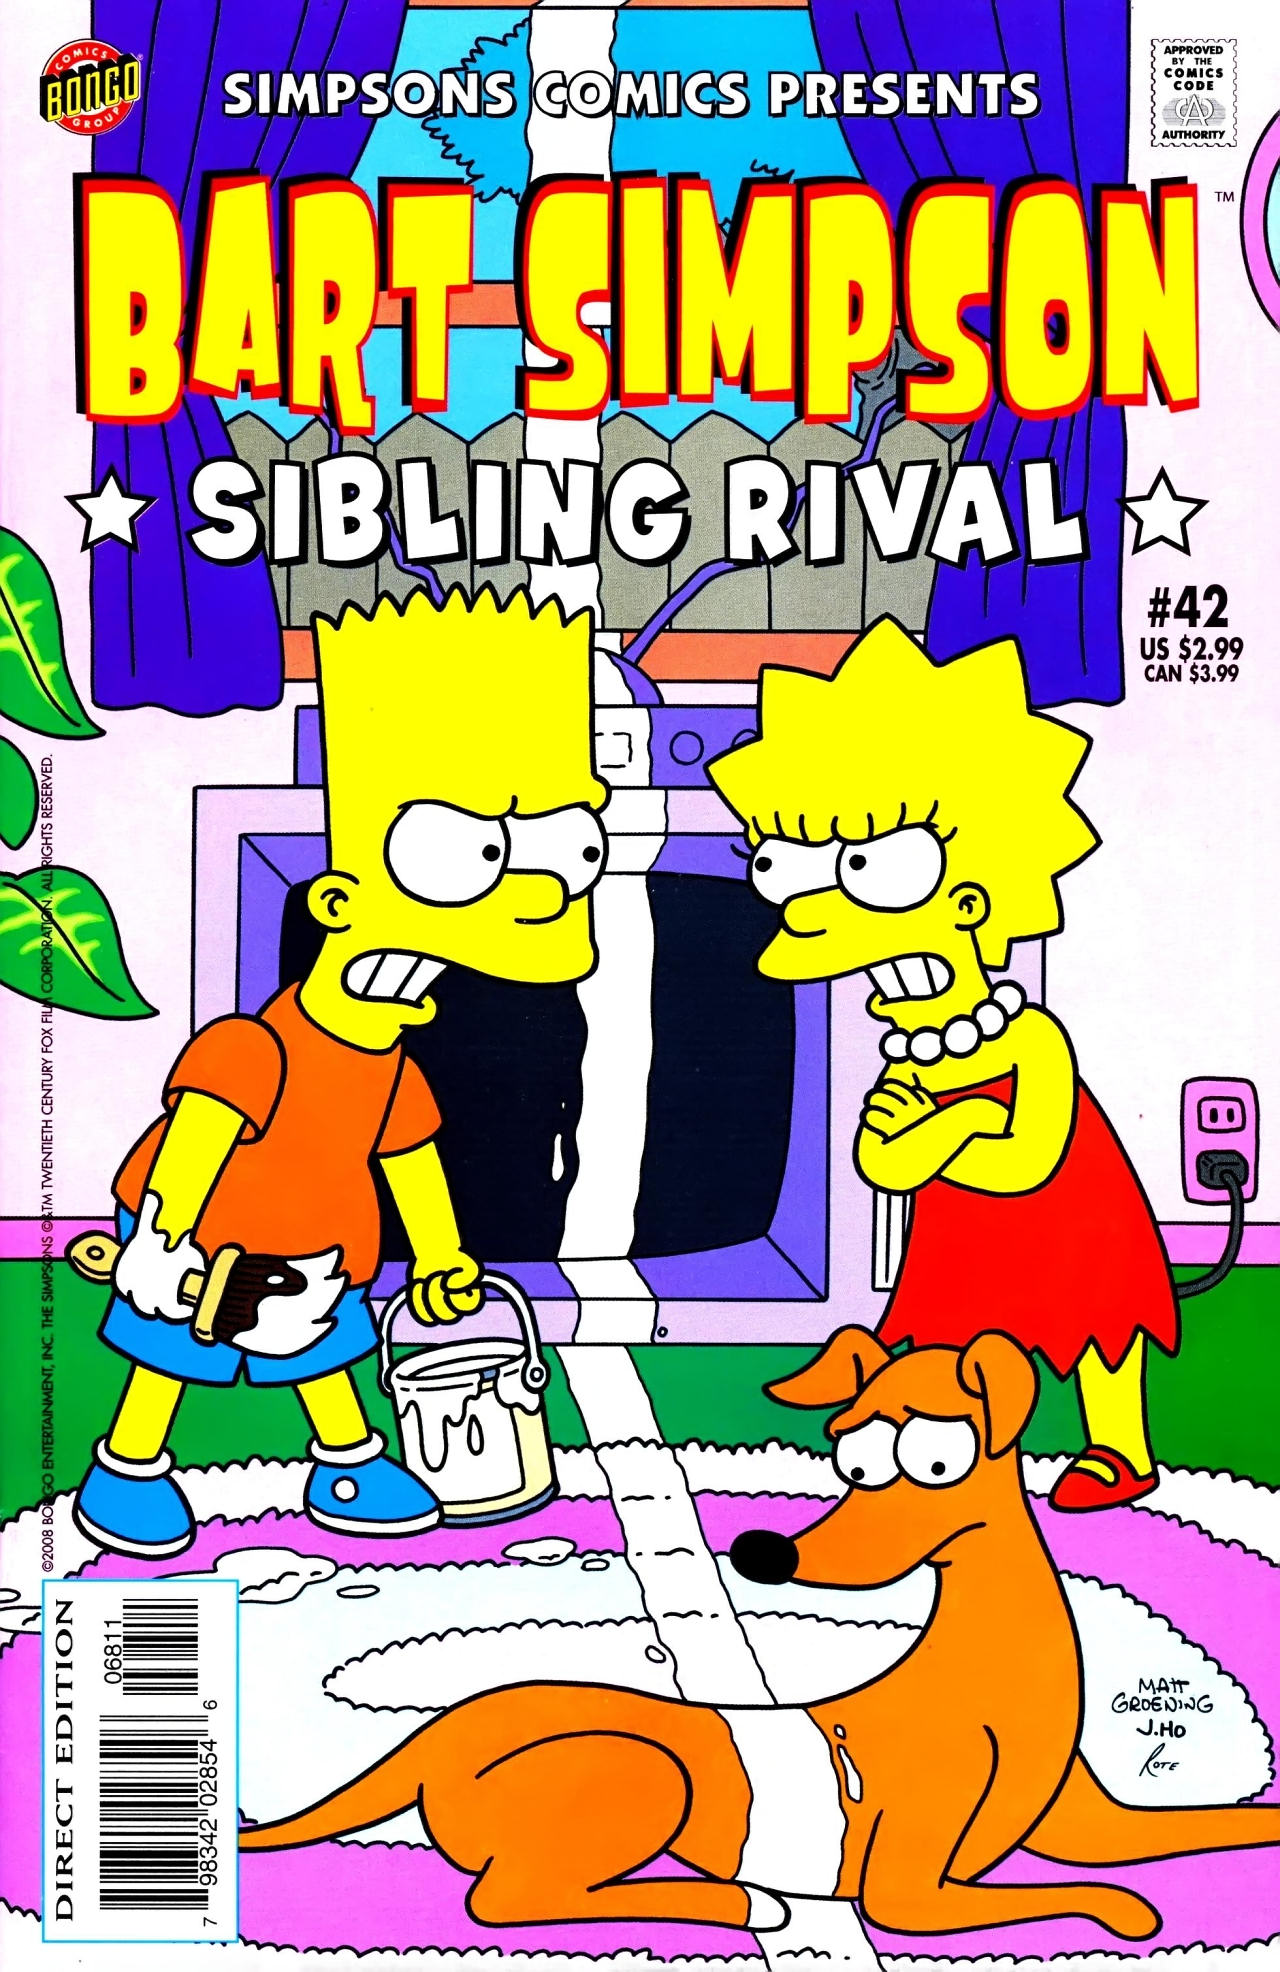 Read online Simpsons Comics Presents Bart Simpson comic -  Issue #42 - 1